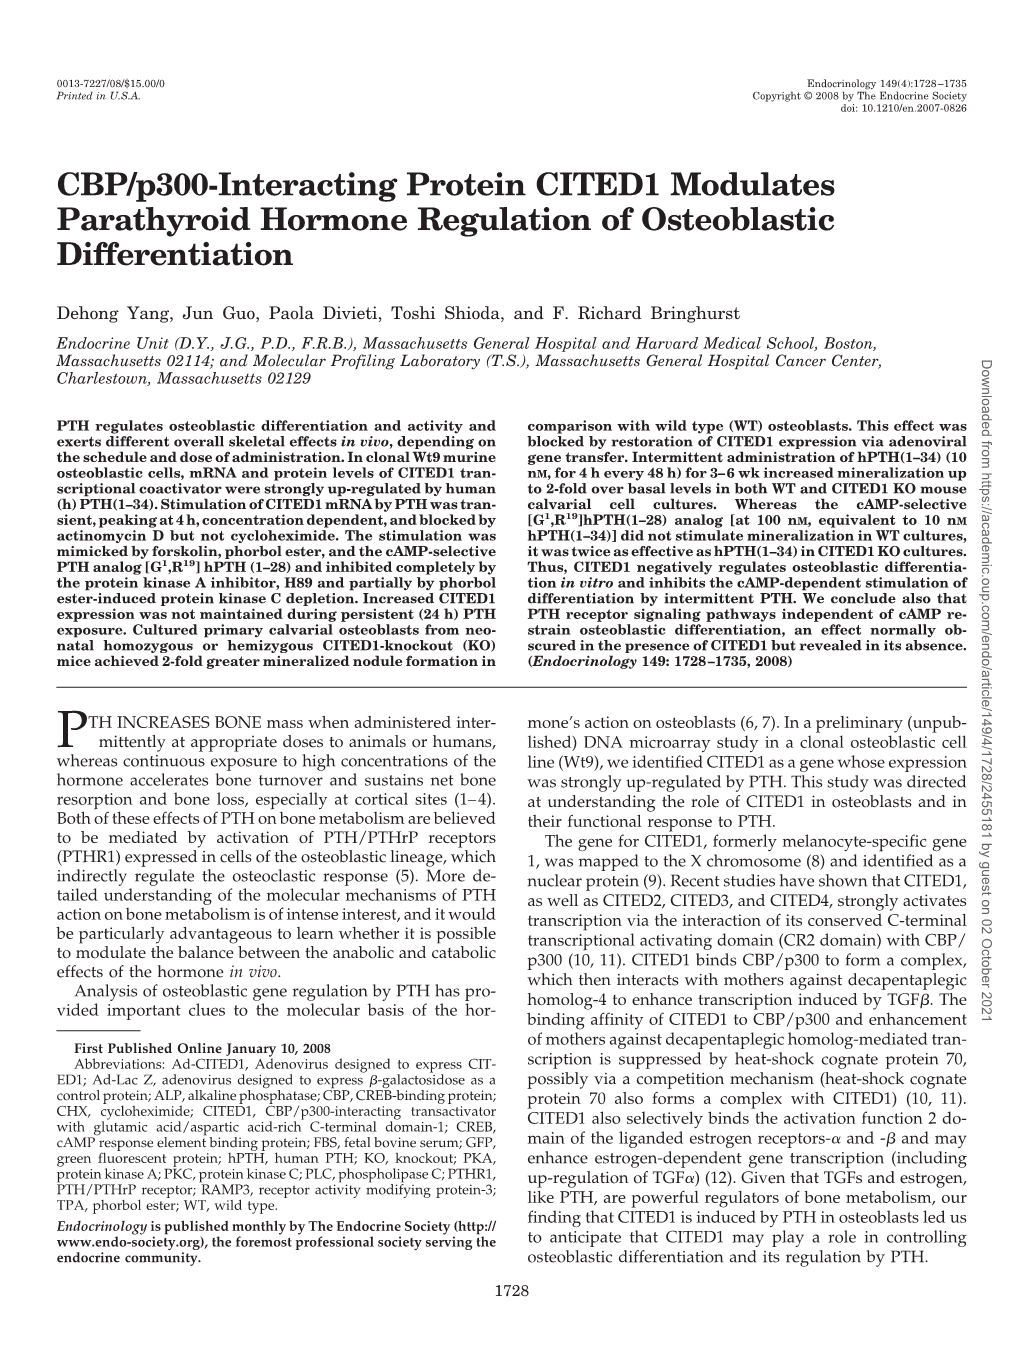 CBP/P300-Interacting Protein CITED1 Modulates Parathyroid Hormone Regulation of Osteoblastic Differentiation